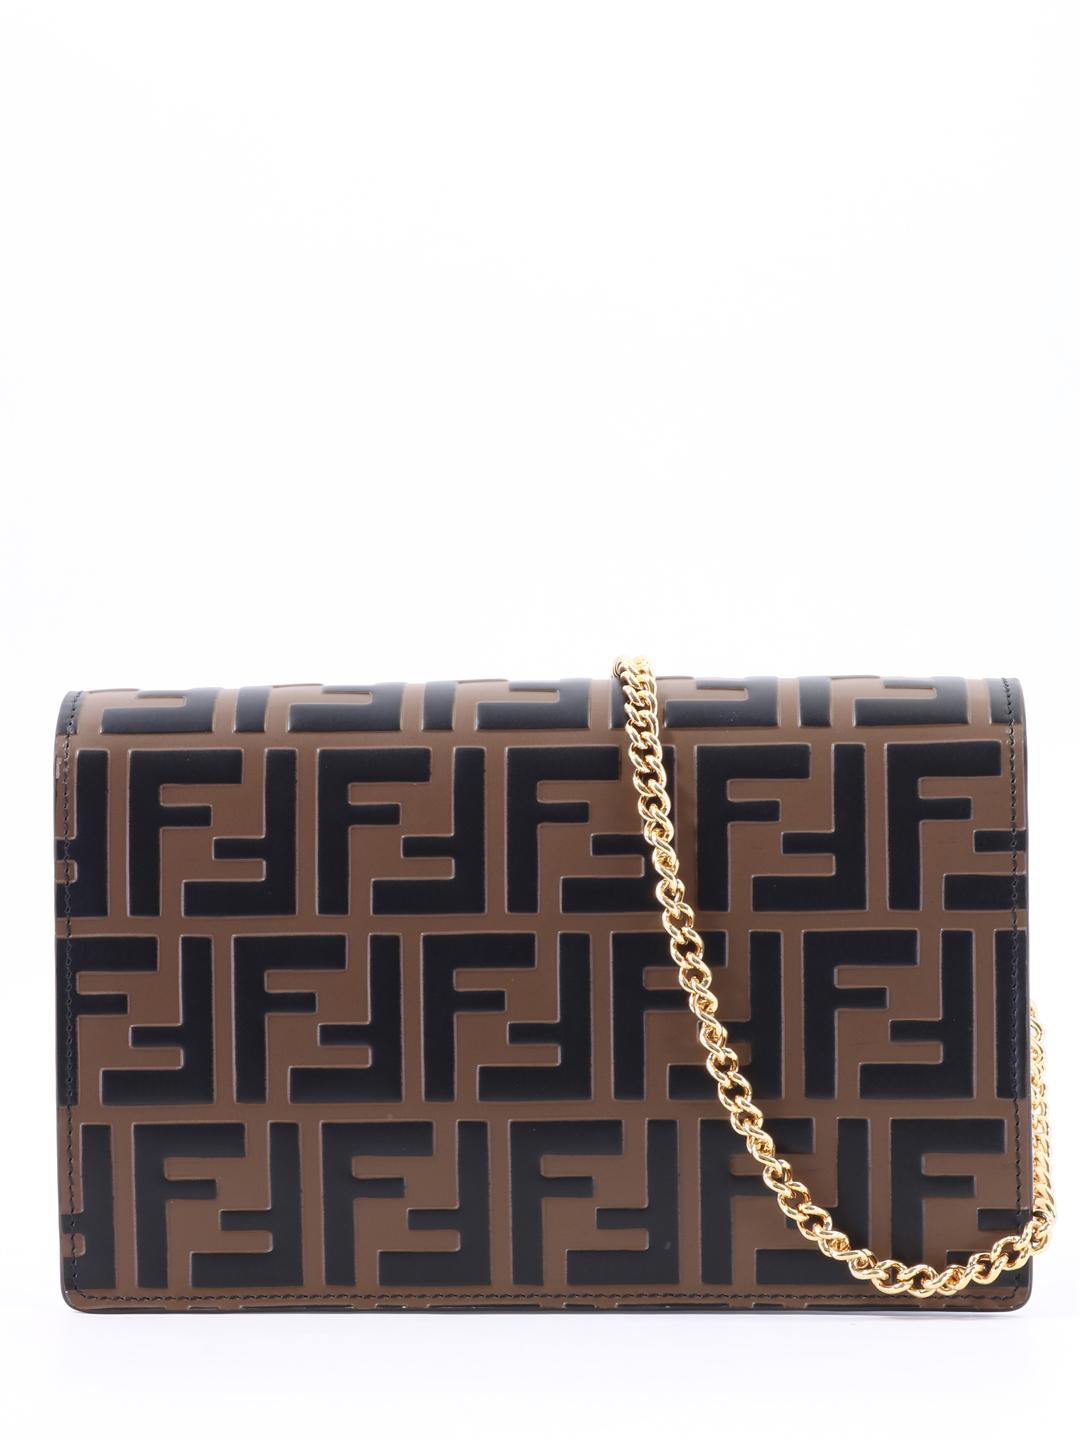 Fendi Leather 'wallet On Chain' Crossbody Bag in White - Lyst